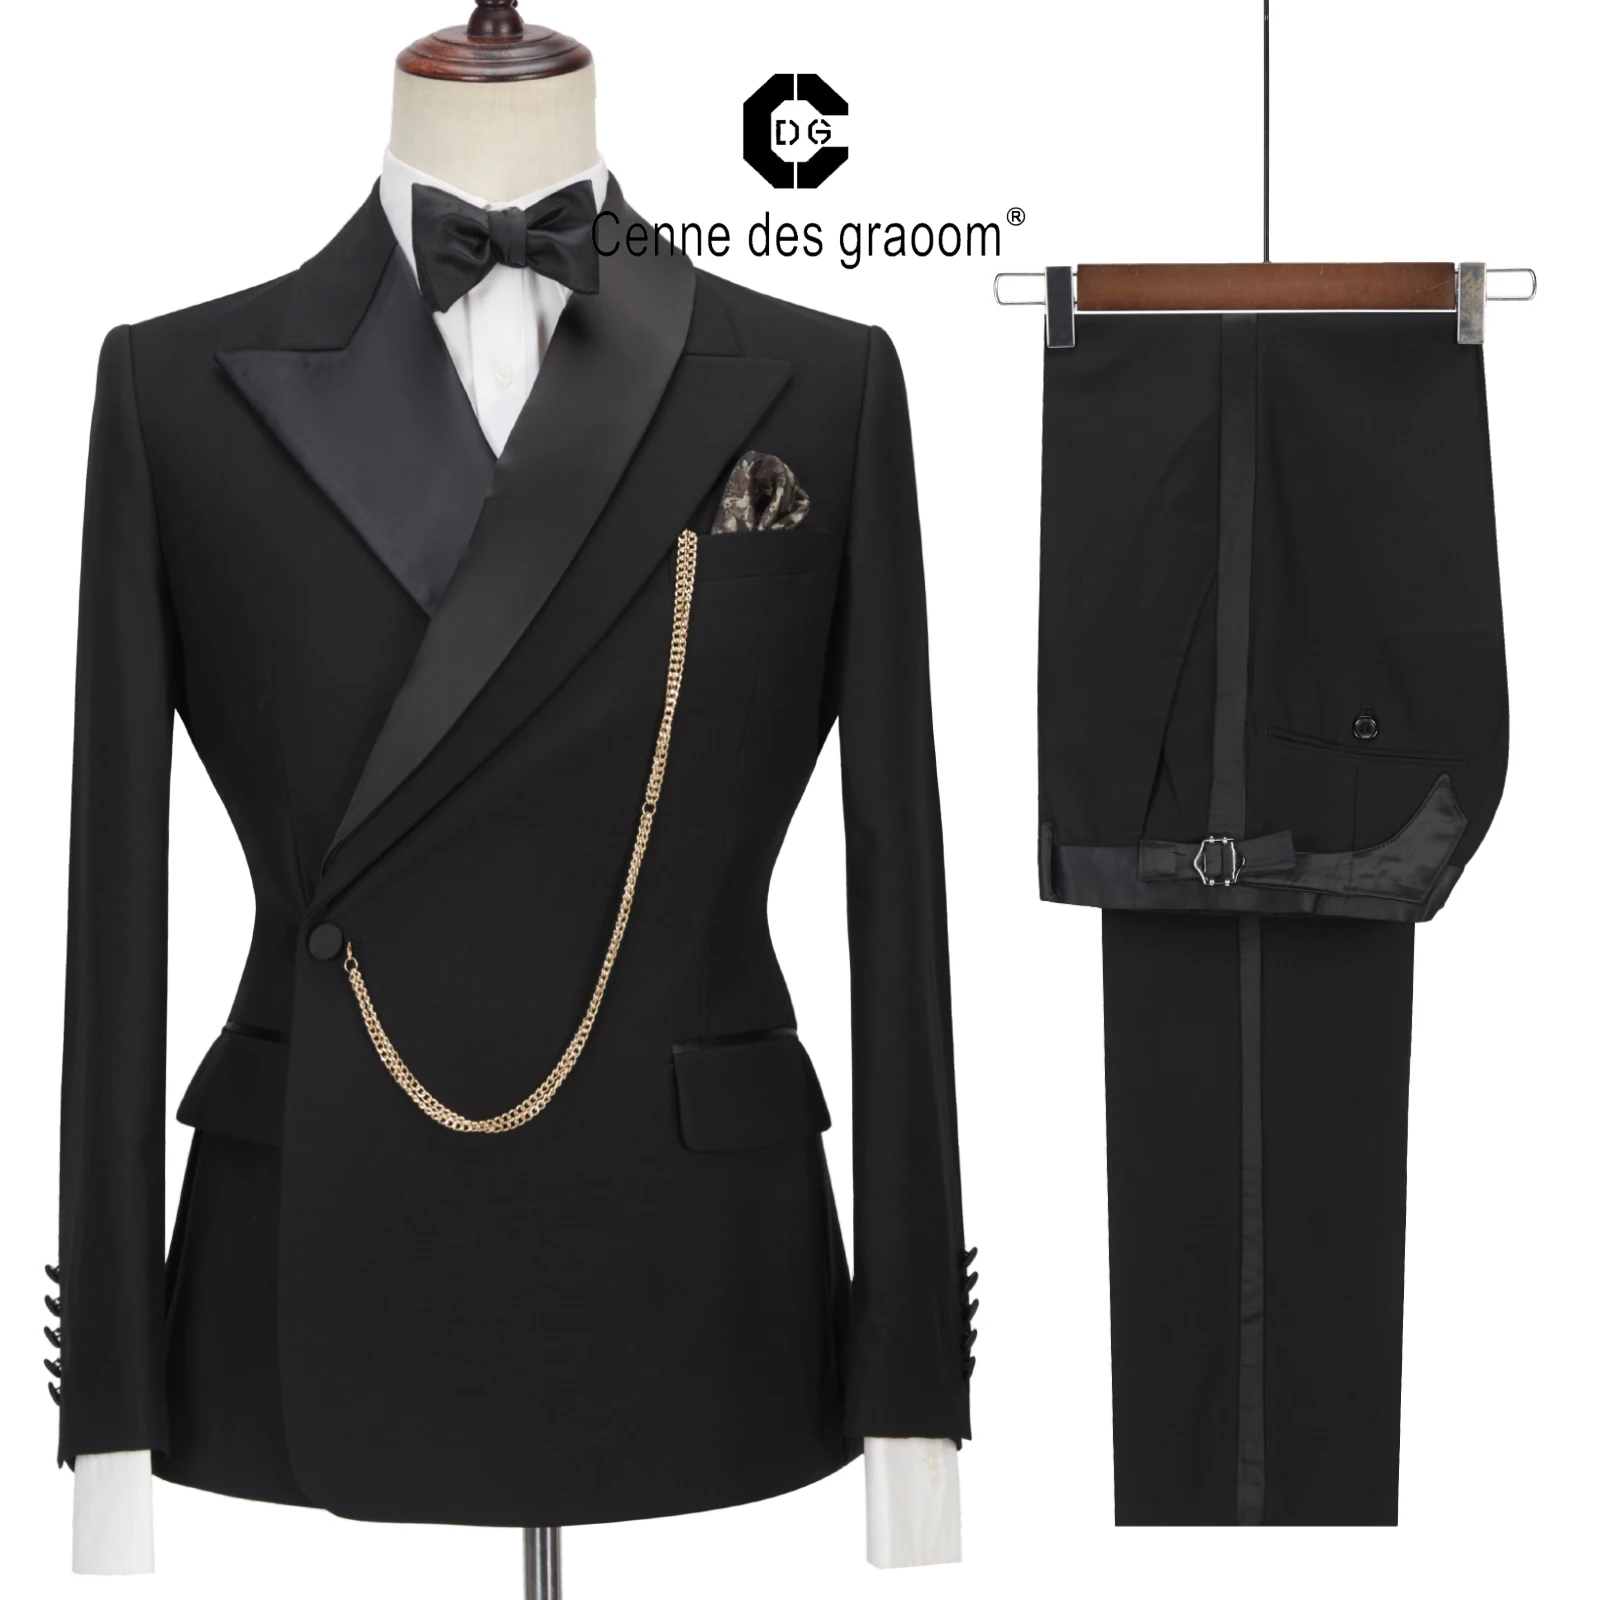 

Cenne Des Graoom Latest Coat Design Men Suits Tailor-Made Tuxedo 2 Pieces Blazer Wedding Party Singer Groom Costume Homme Black